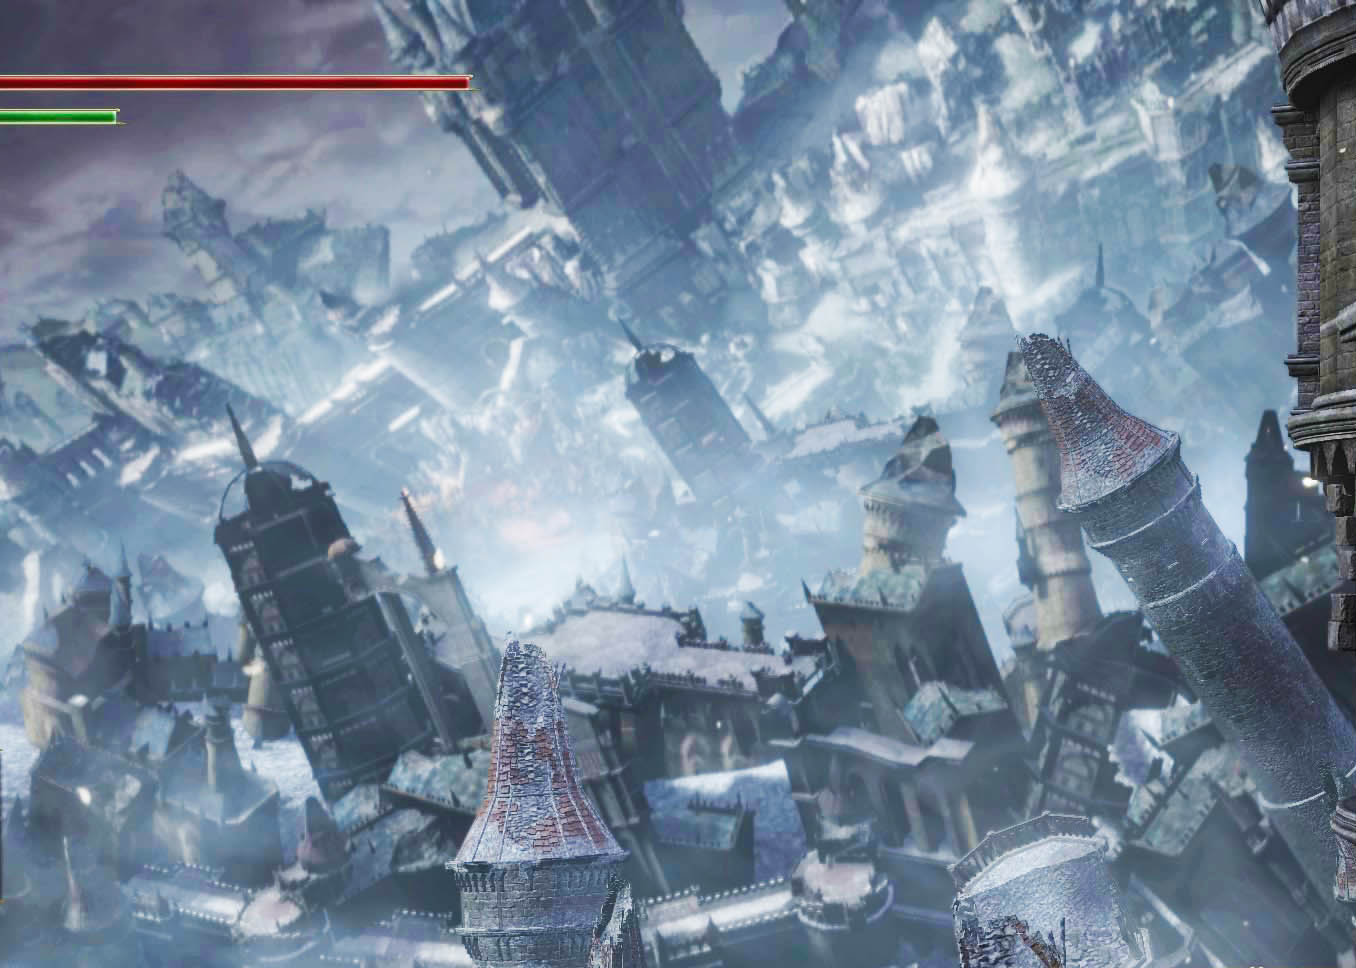 Dark Souls III: The Ringed City Груда отбросов (The Dreg Heap)